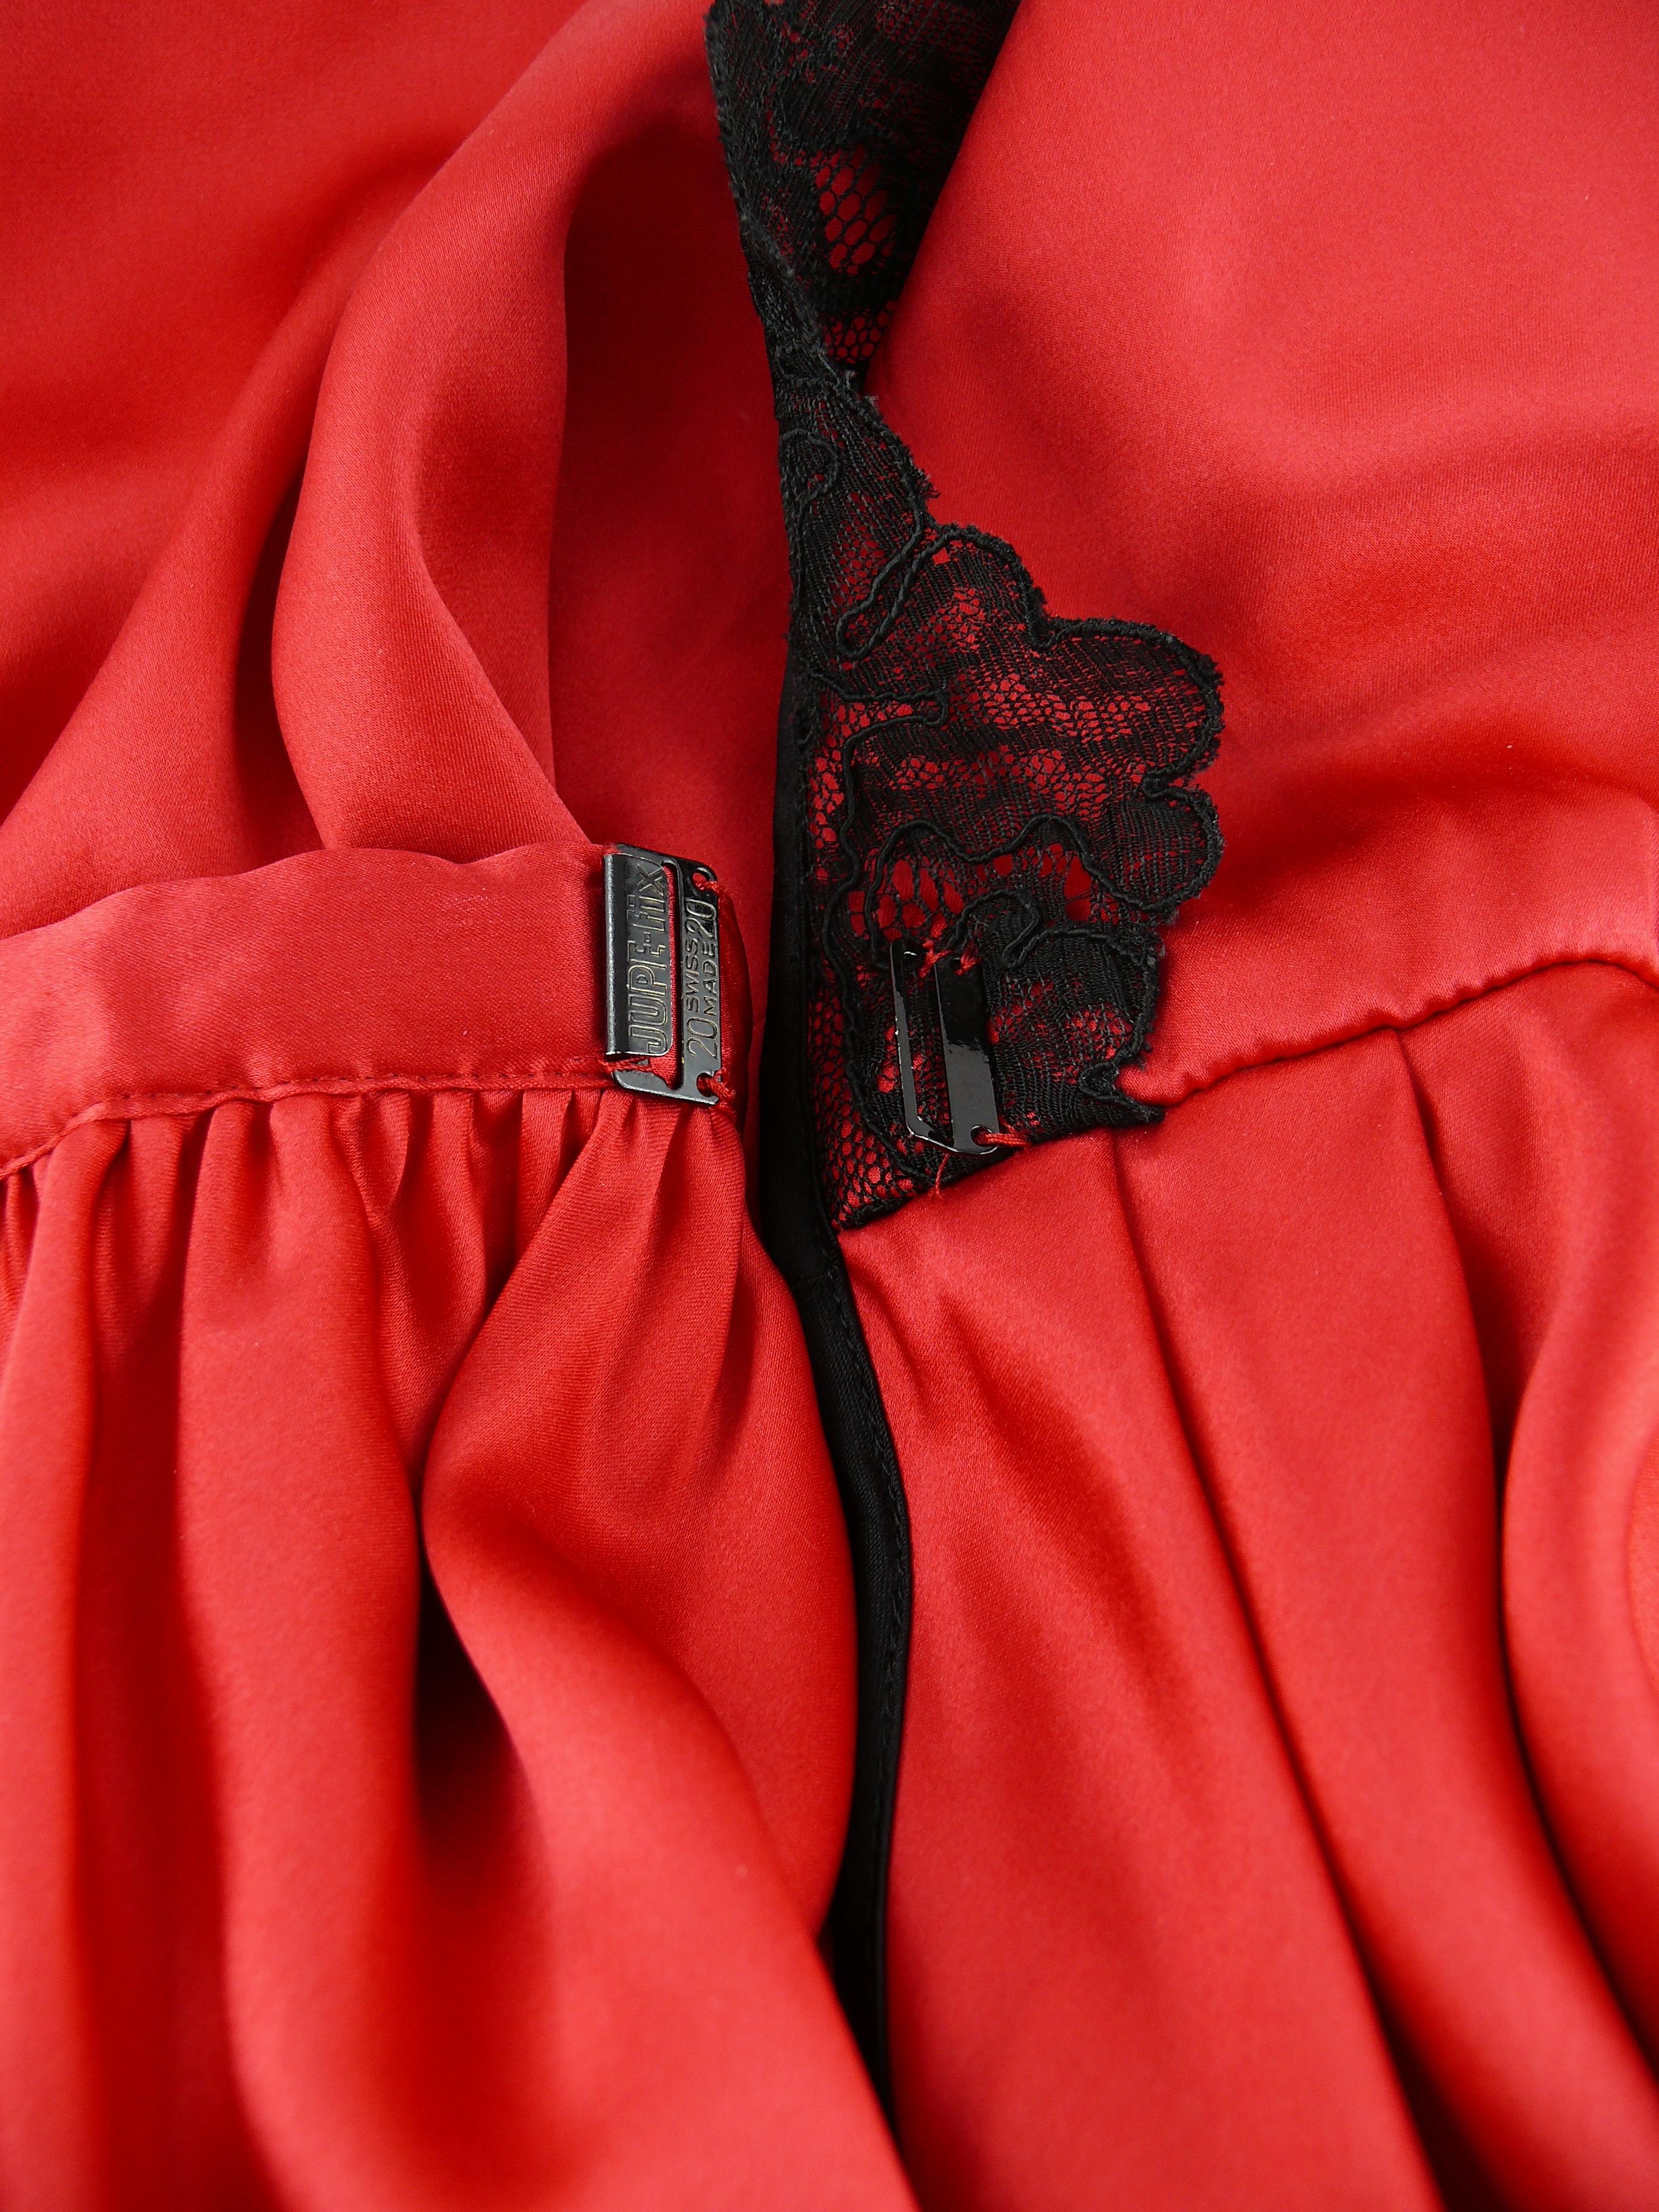 Yves Saint Laurent YSL Rive Gauche Vintage Red Silk Wrap Style Dress For Sale 2